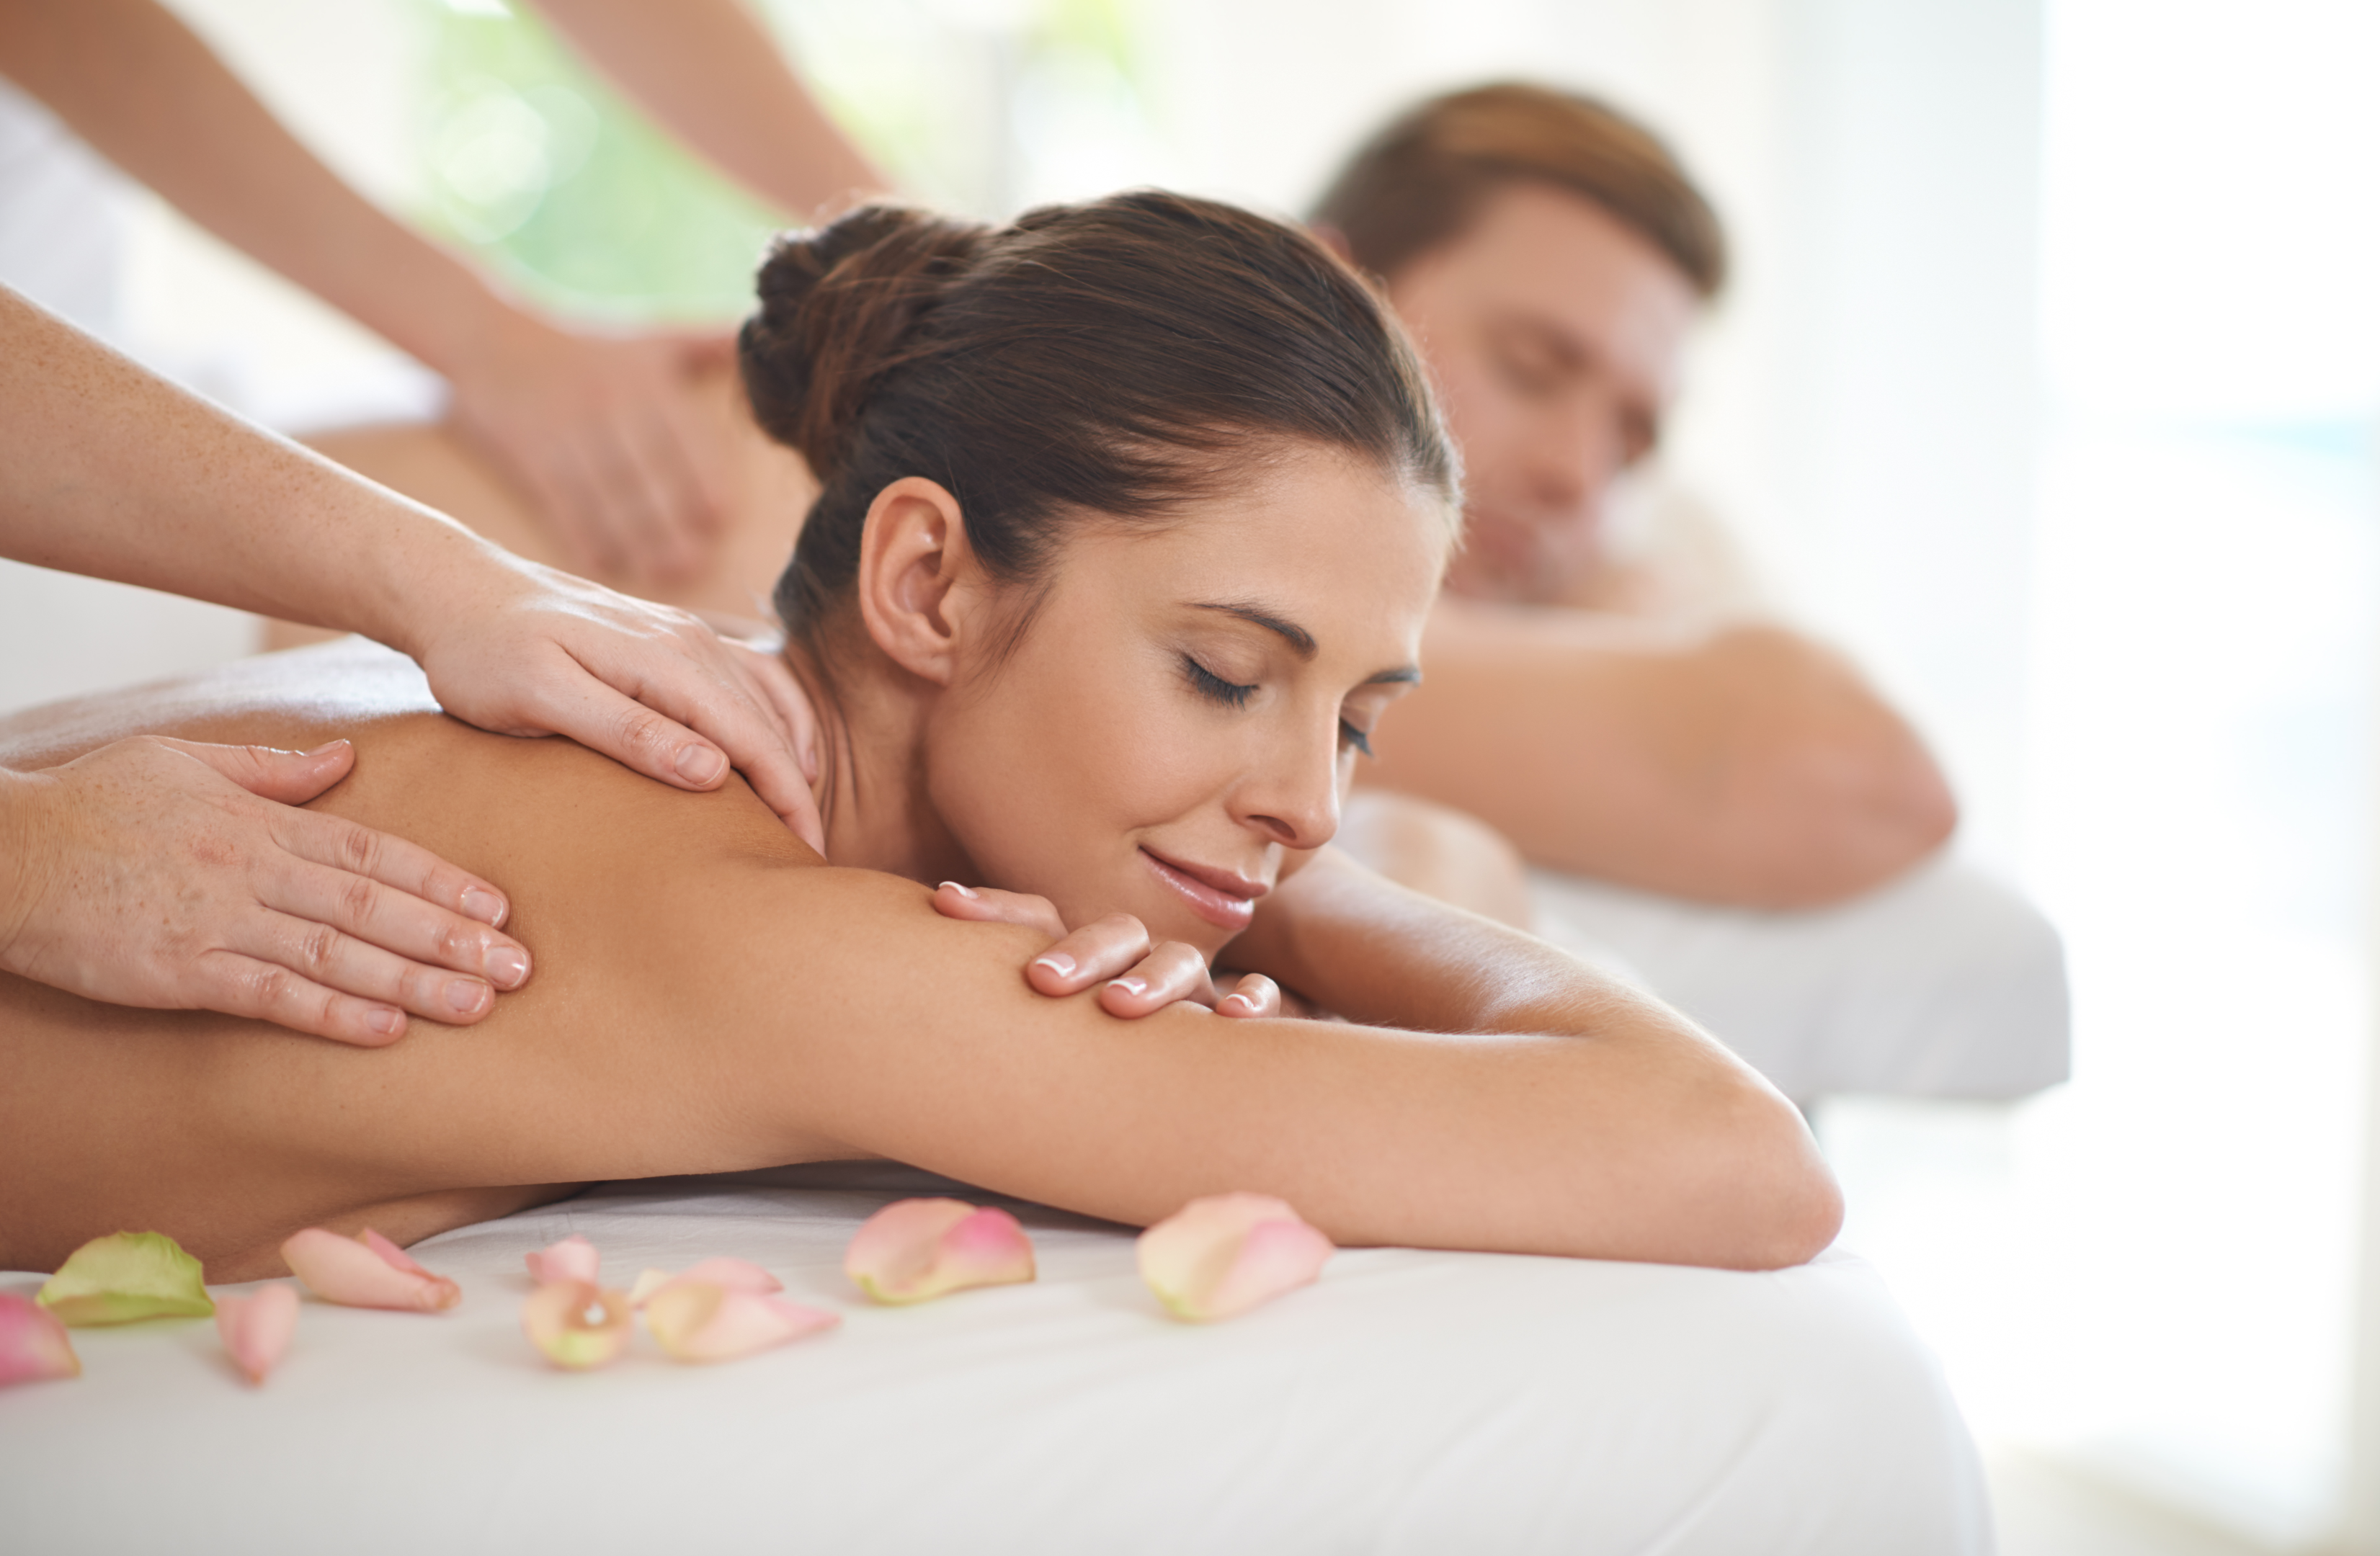 activelife Trigger Point Back Massager - Deep Tissue Massager for